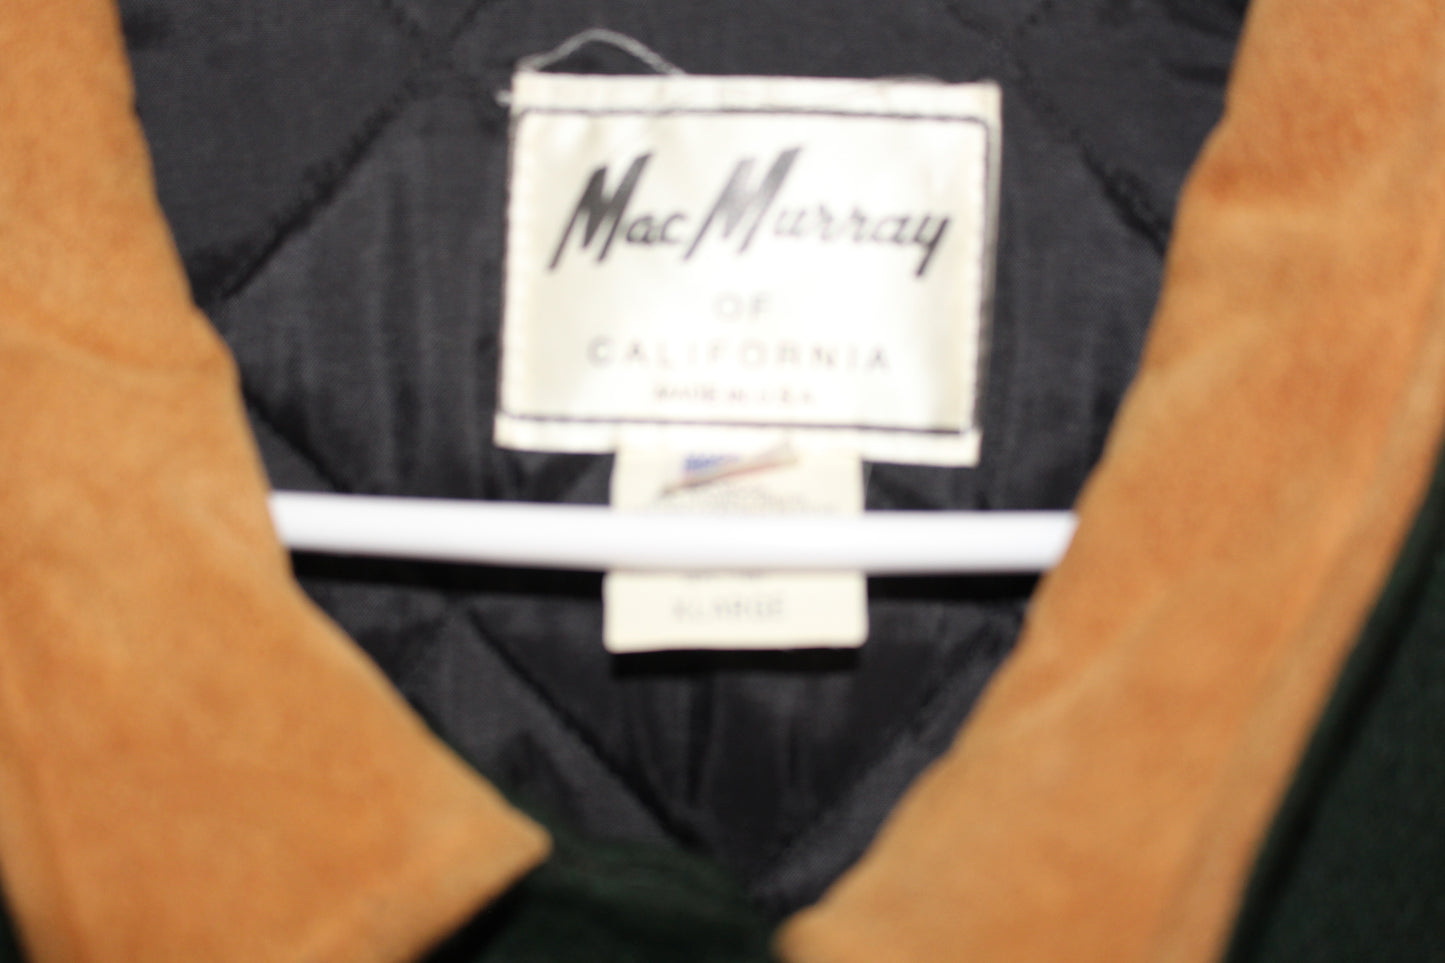 Rare SeaWorld Mac Murray Suede & Wool Bomber Jacket (XL)